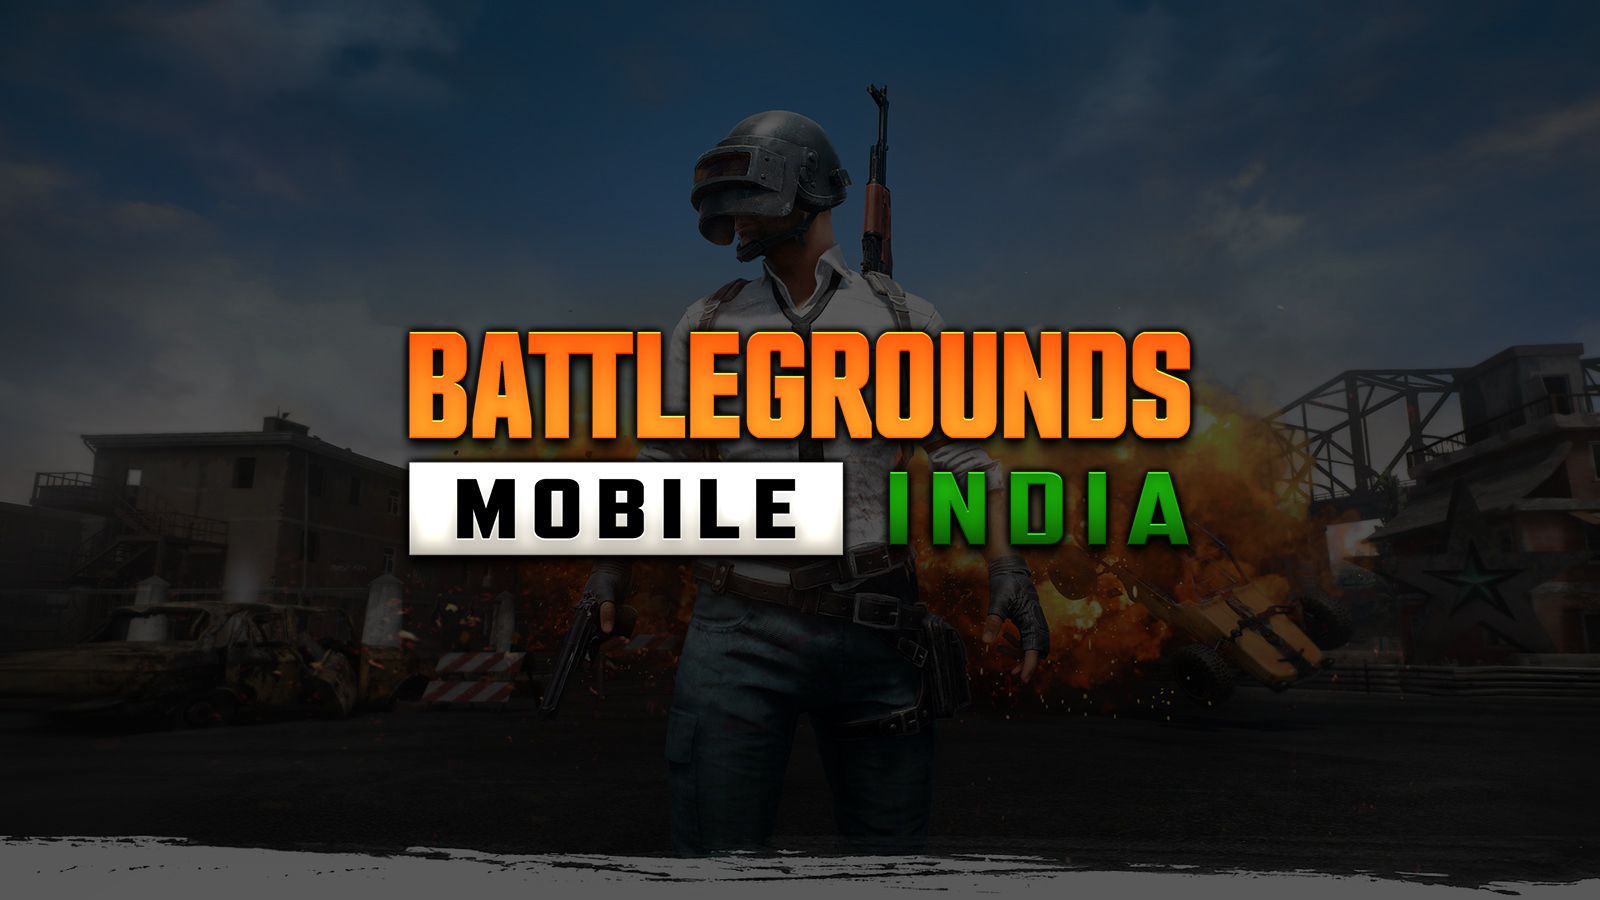 Heroes of Battleground download the new version